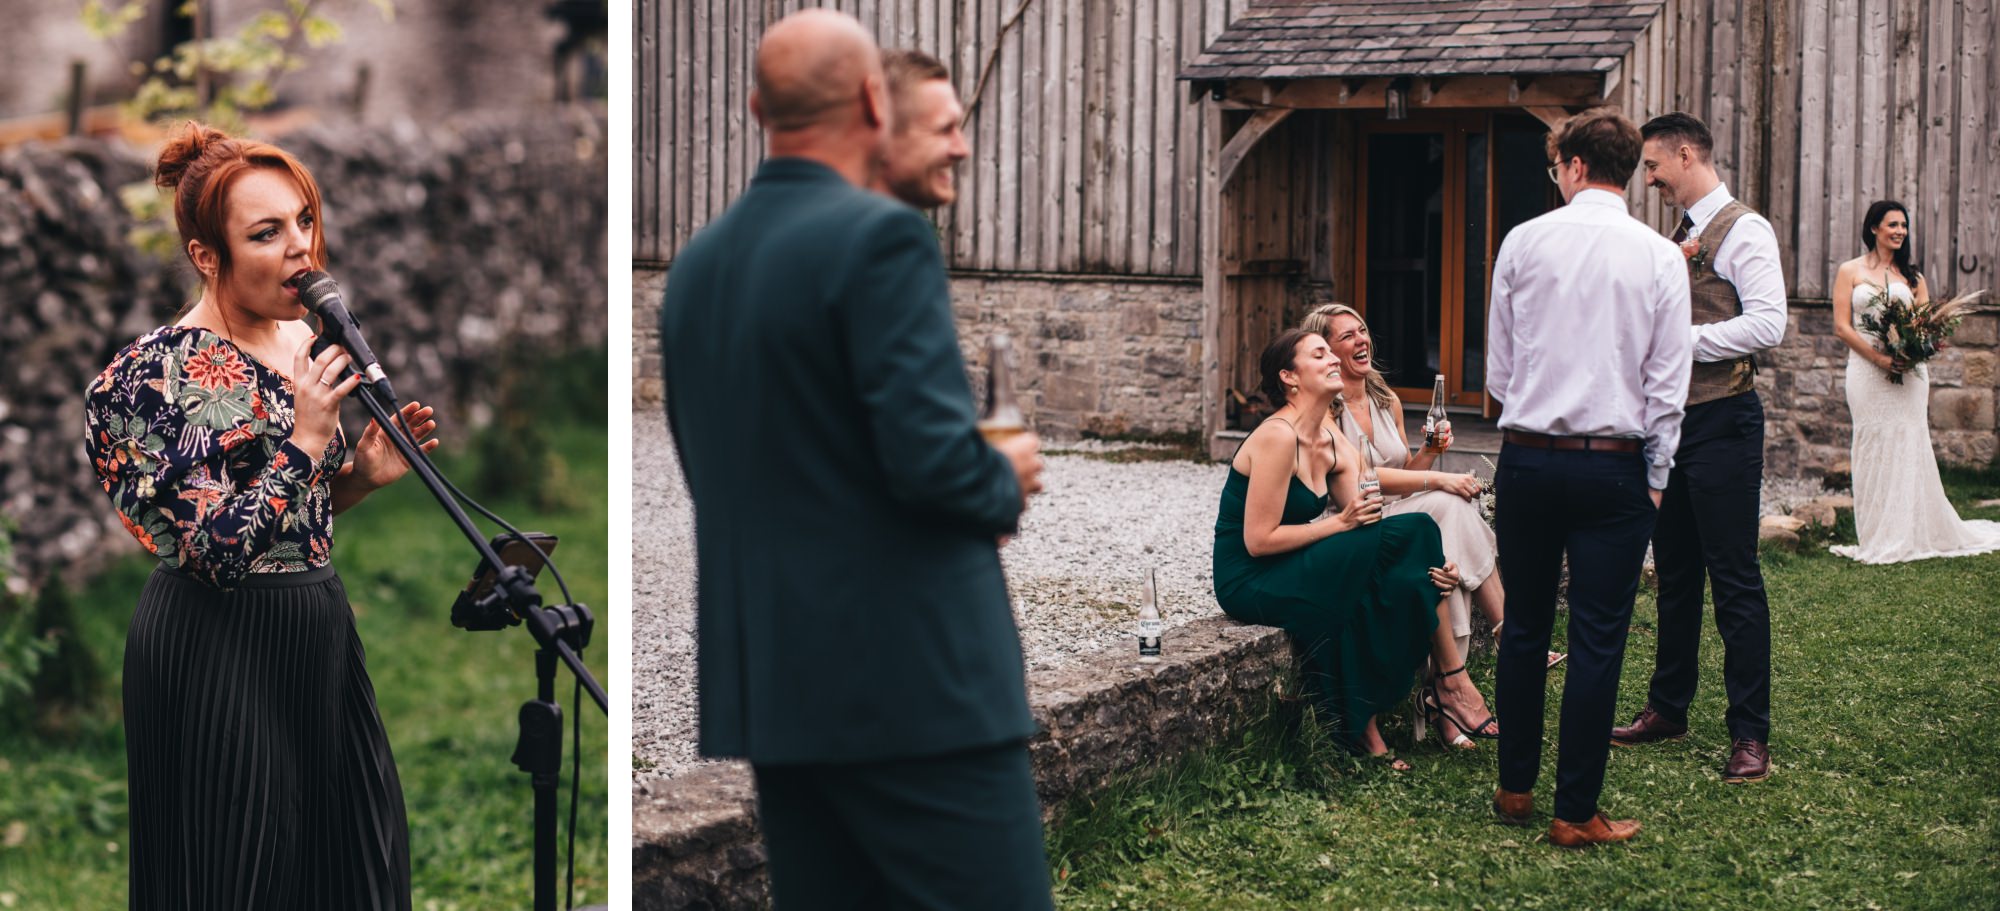 singer entertains wedding guests